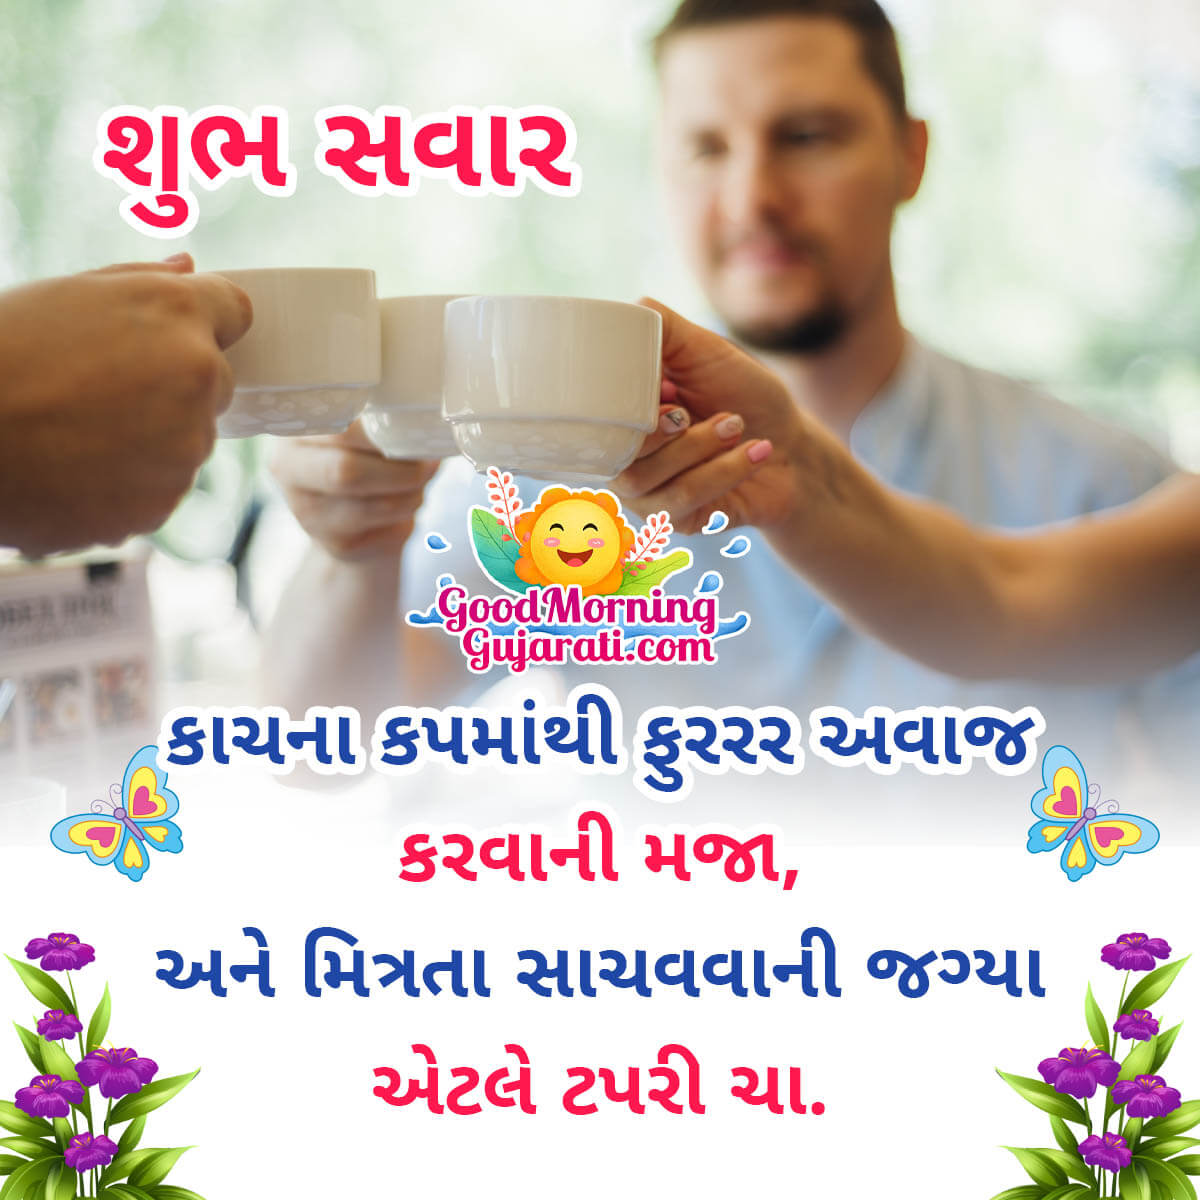 Shubh Sawar Gujarati Tea Quote Photo